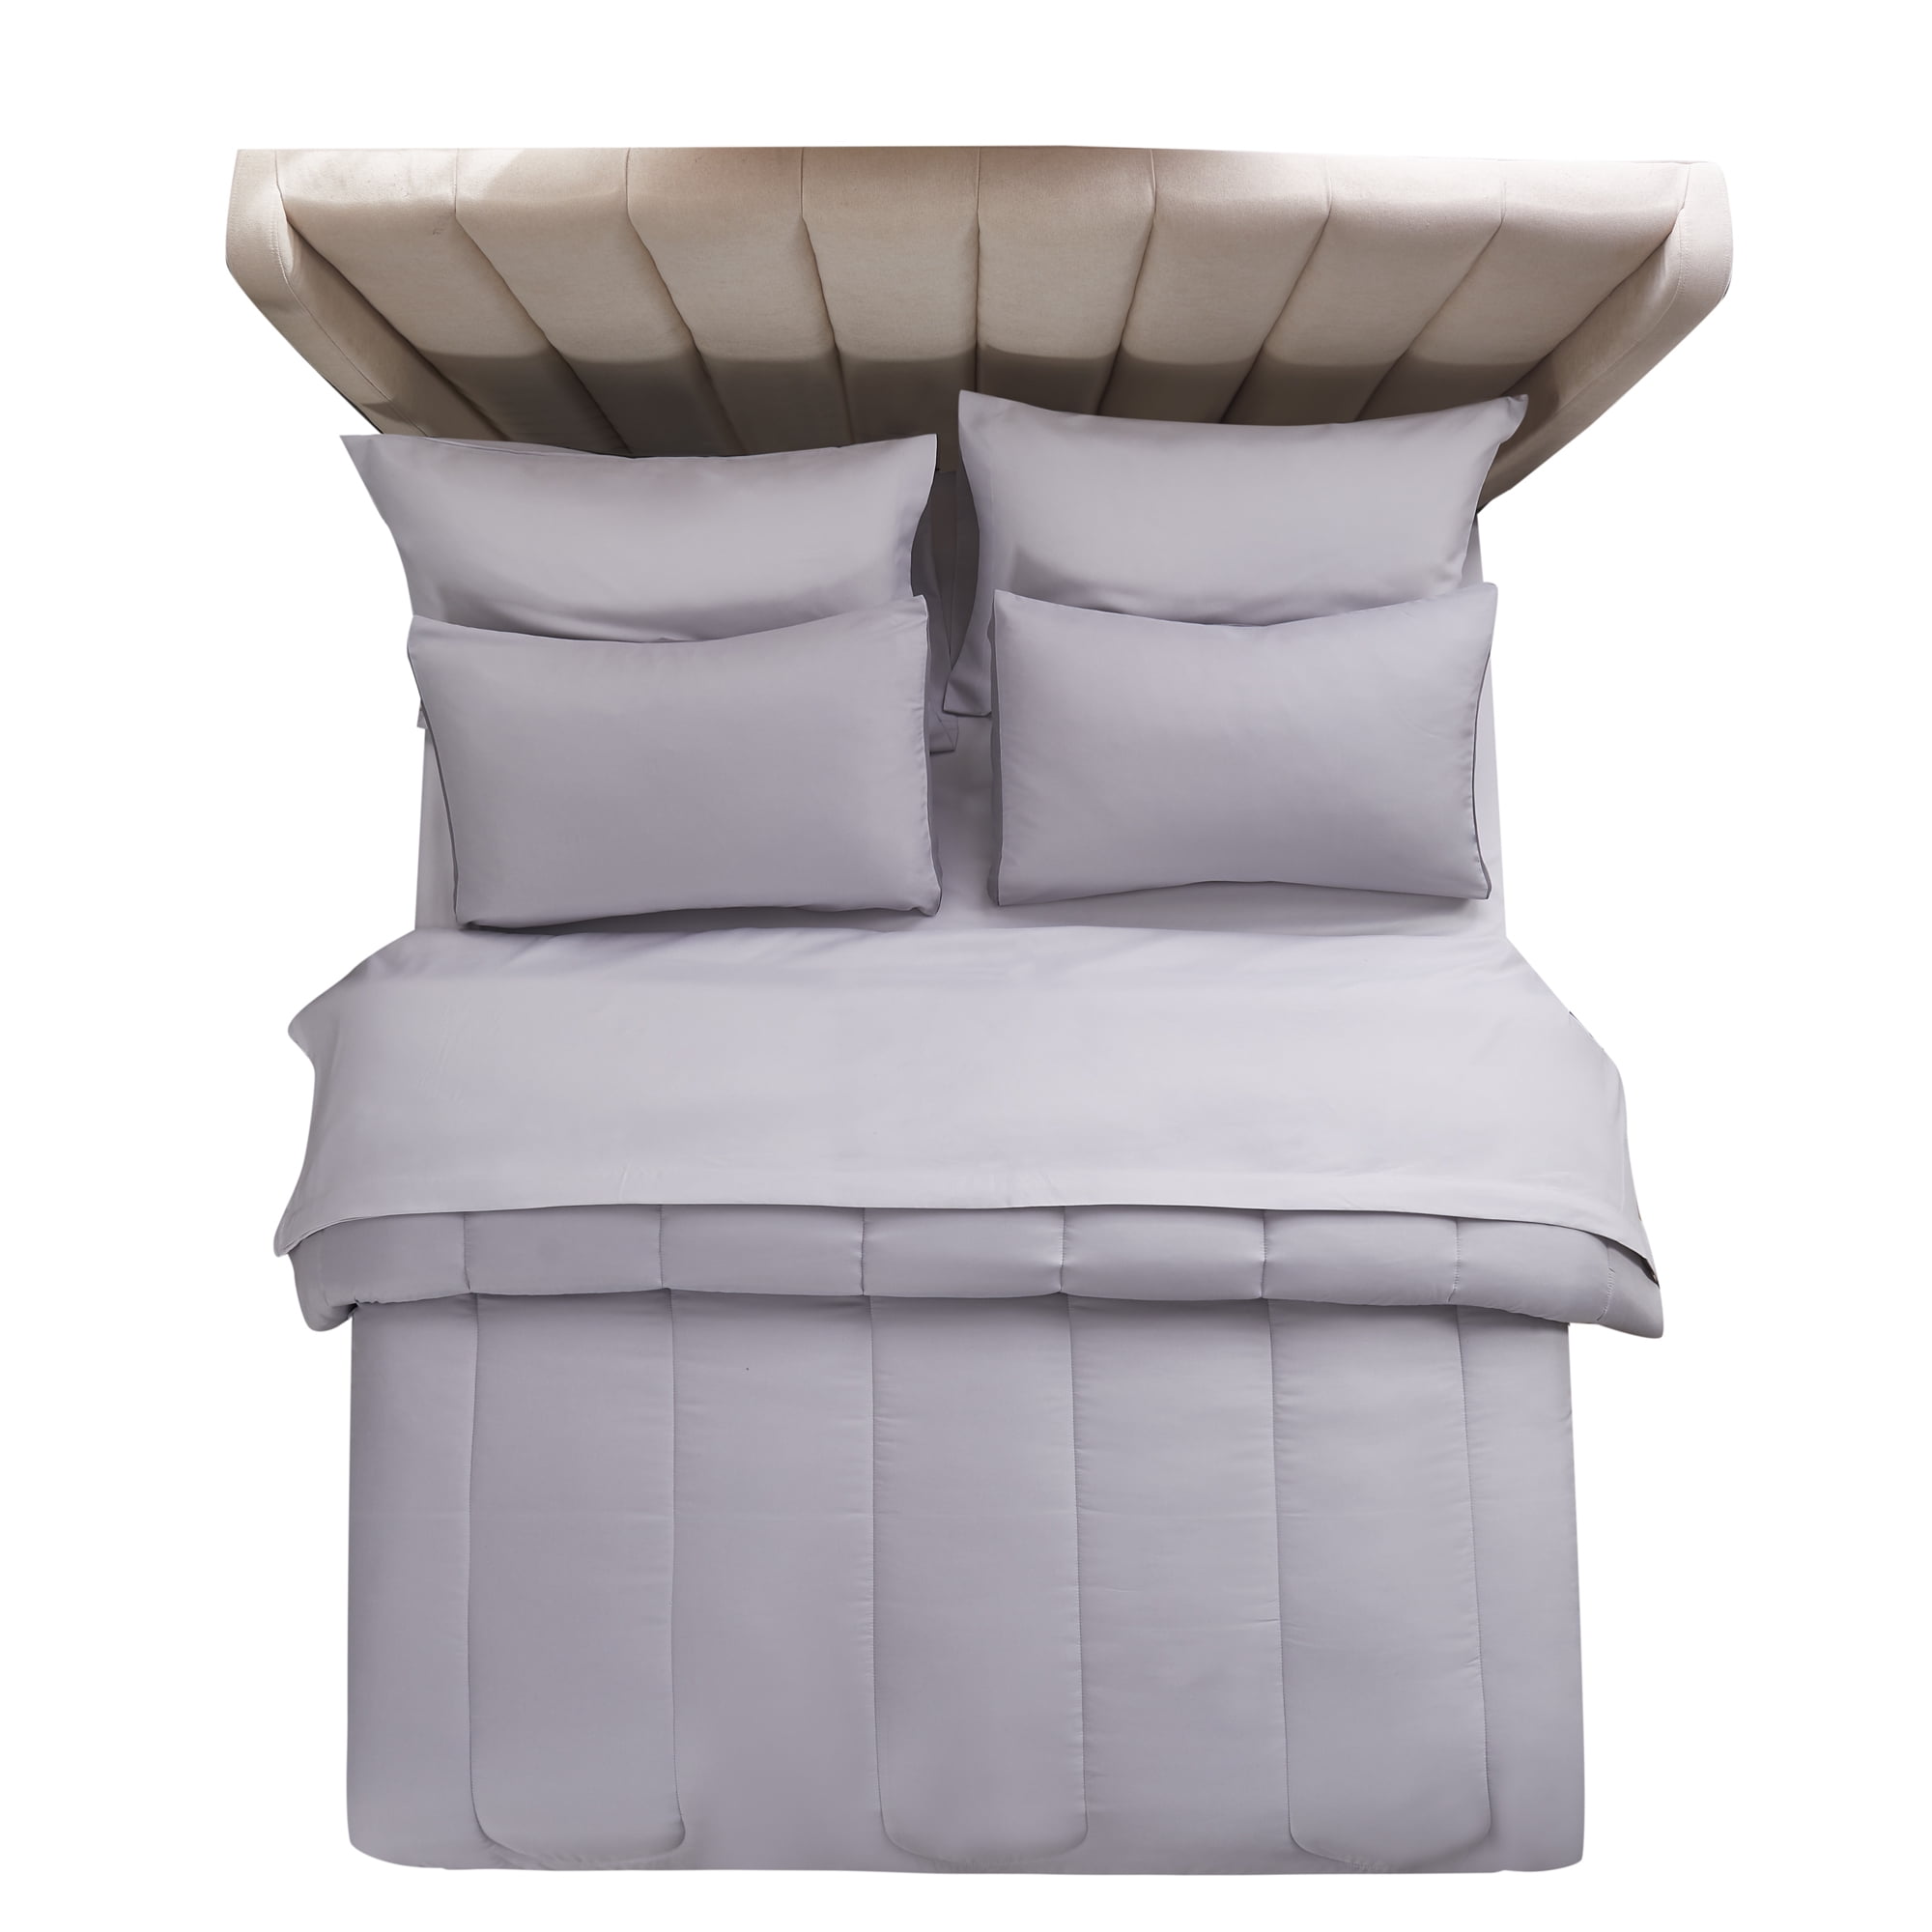 Goldstar Bedding 8-Piece King Comforter Set in Grey